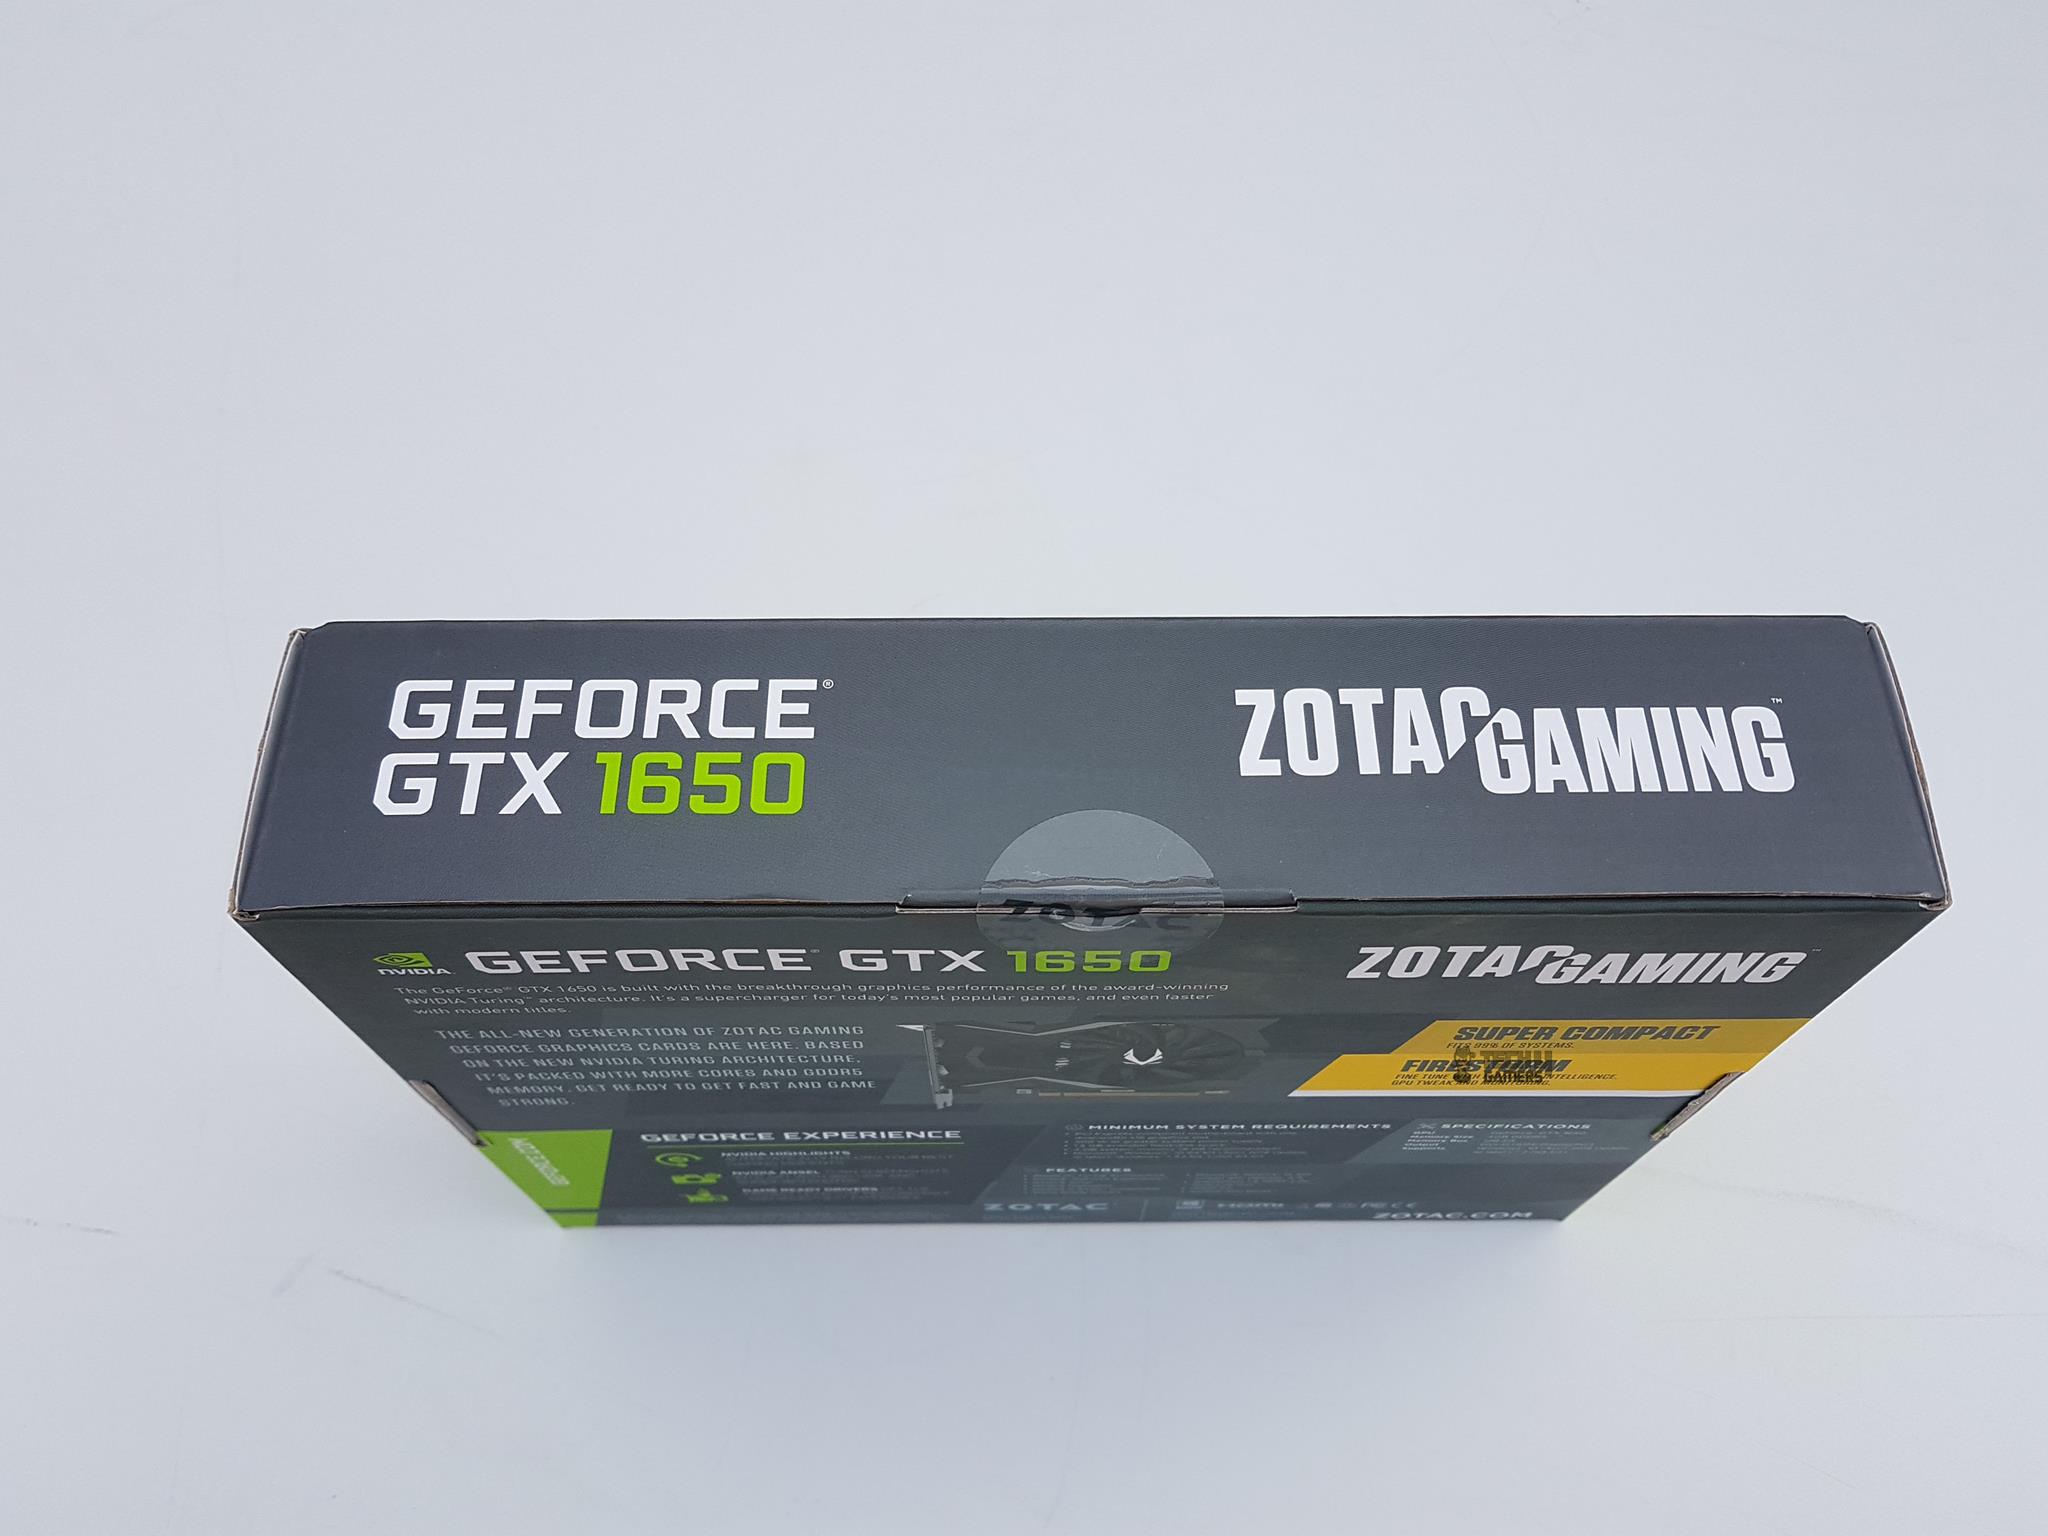 Zotac Gaming Geforce Gtx 1650 Oc Printed area